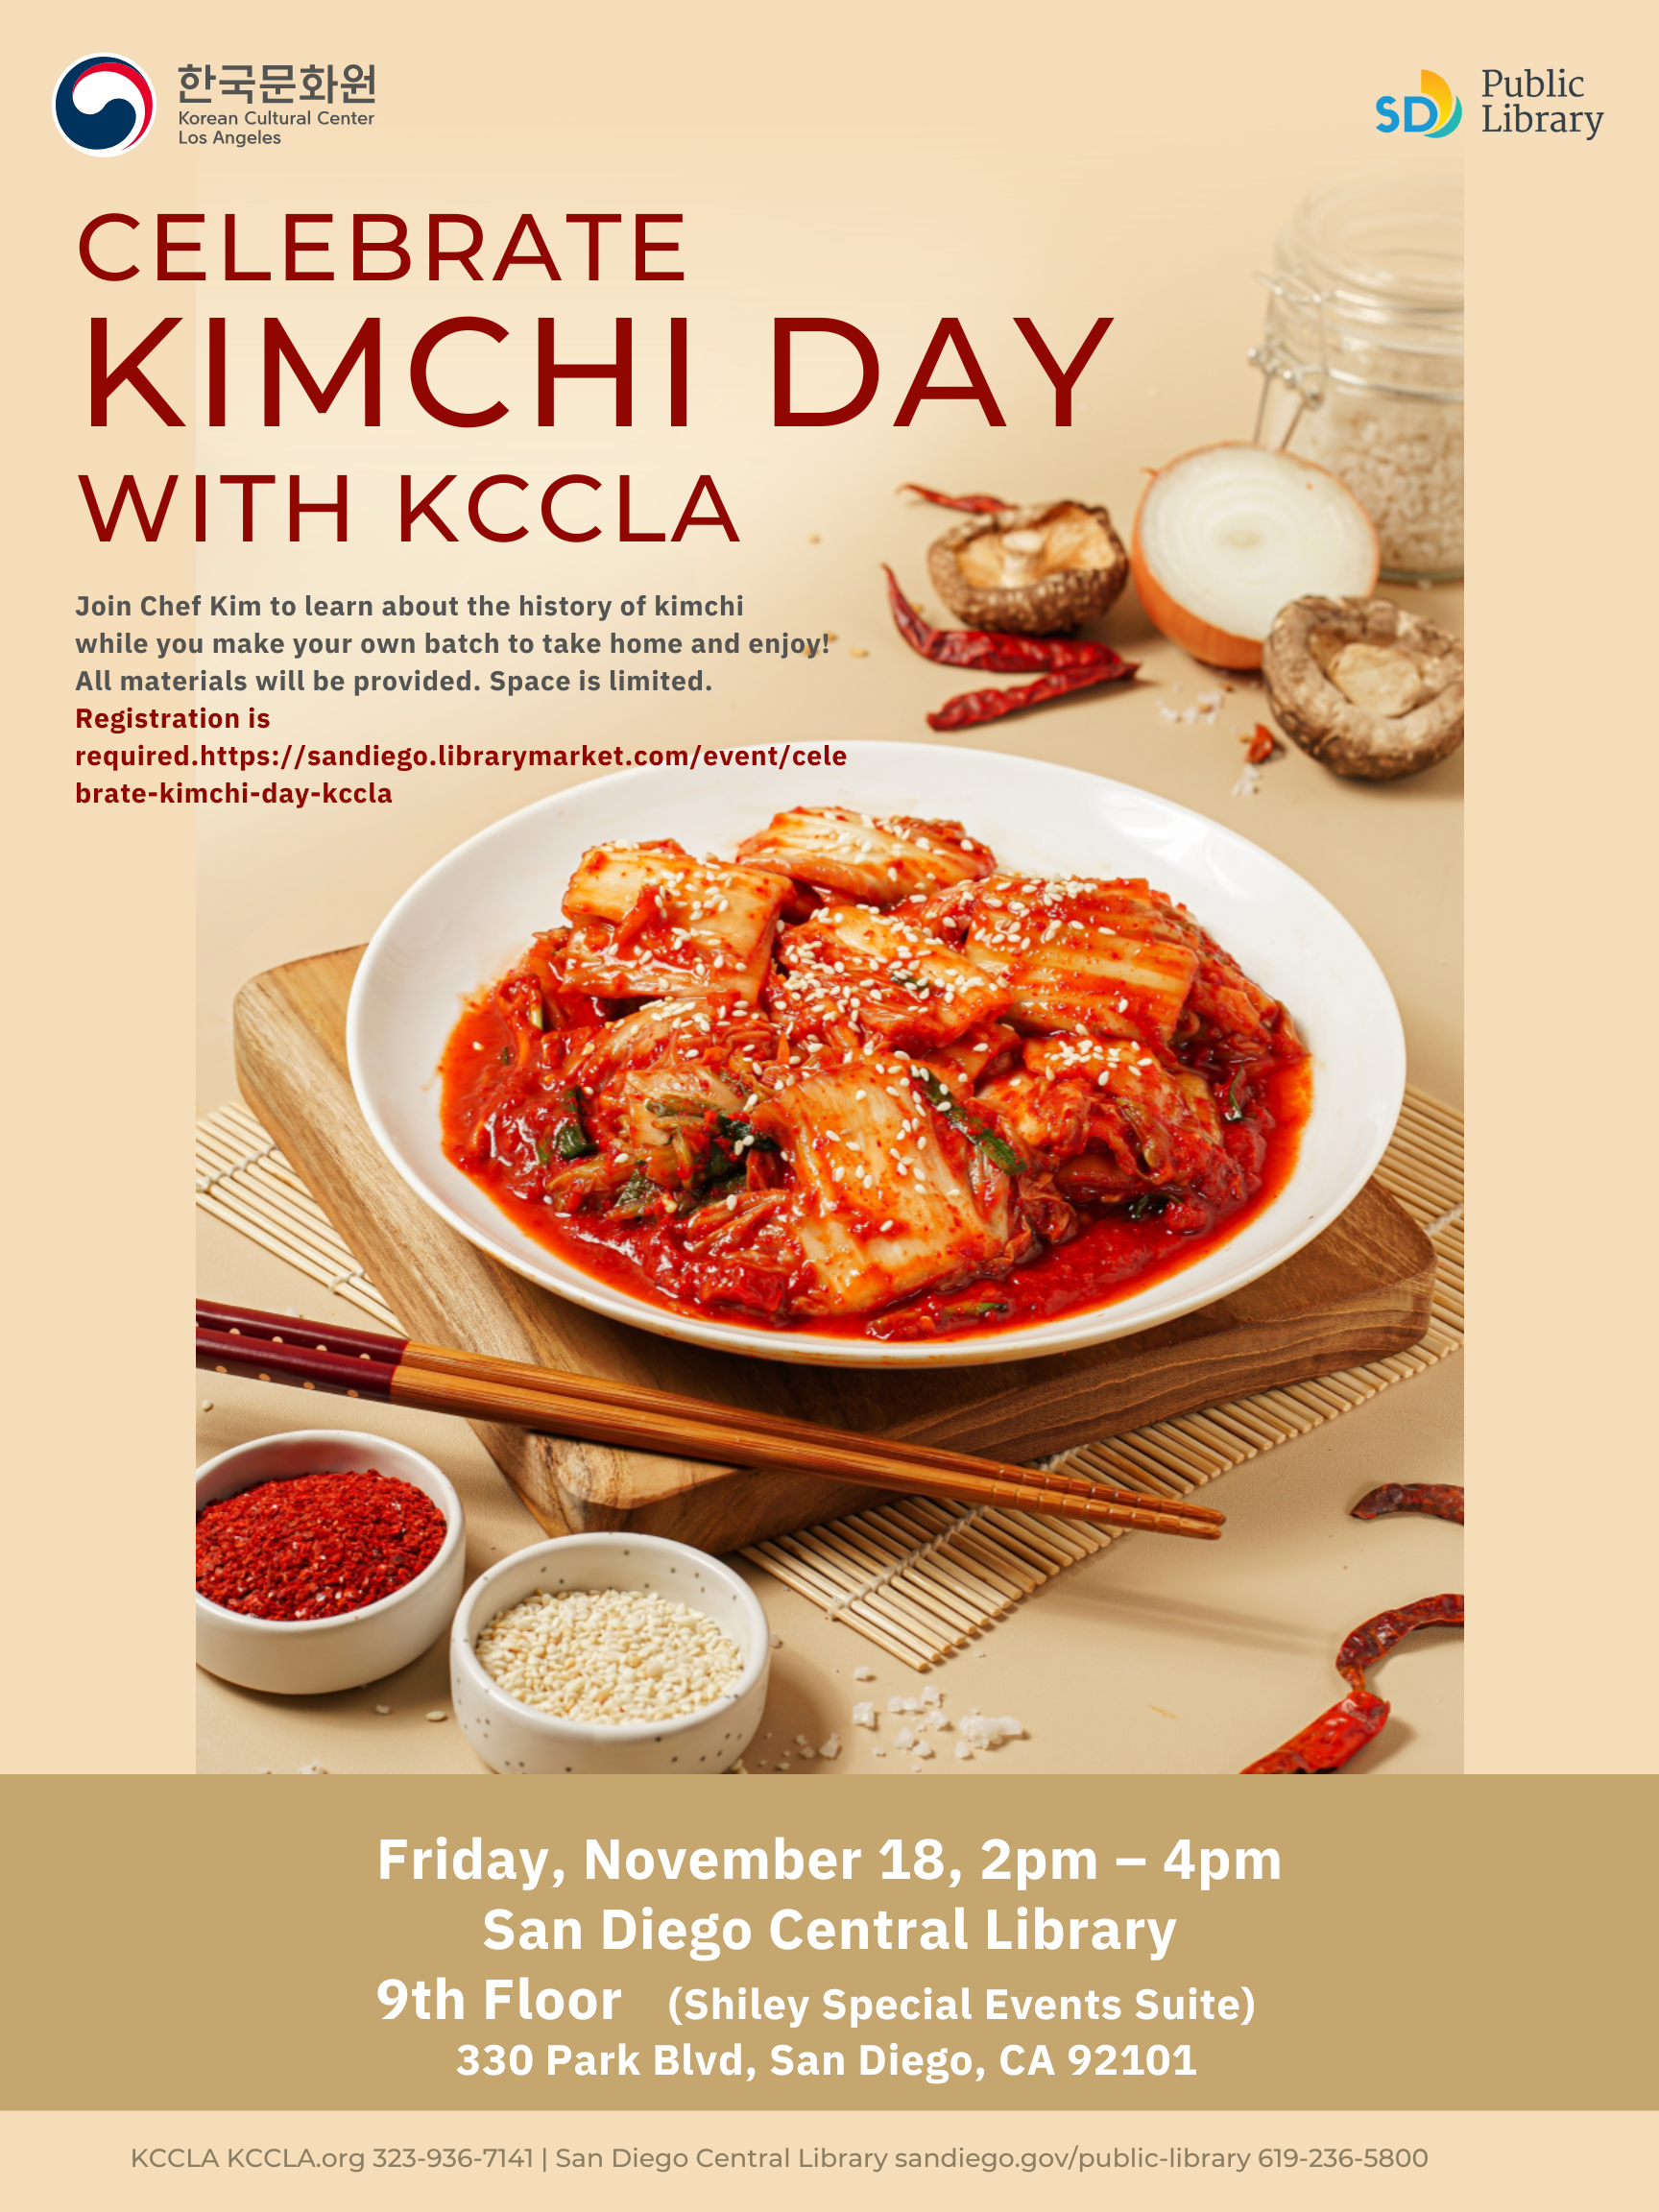 Korean Cultural Center, Los Angeles - KCCLA